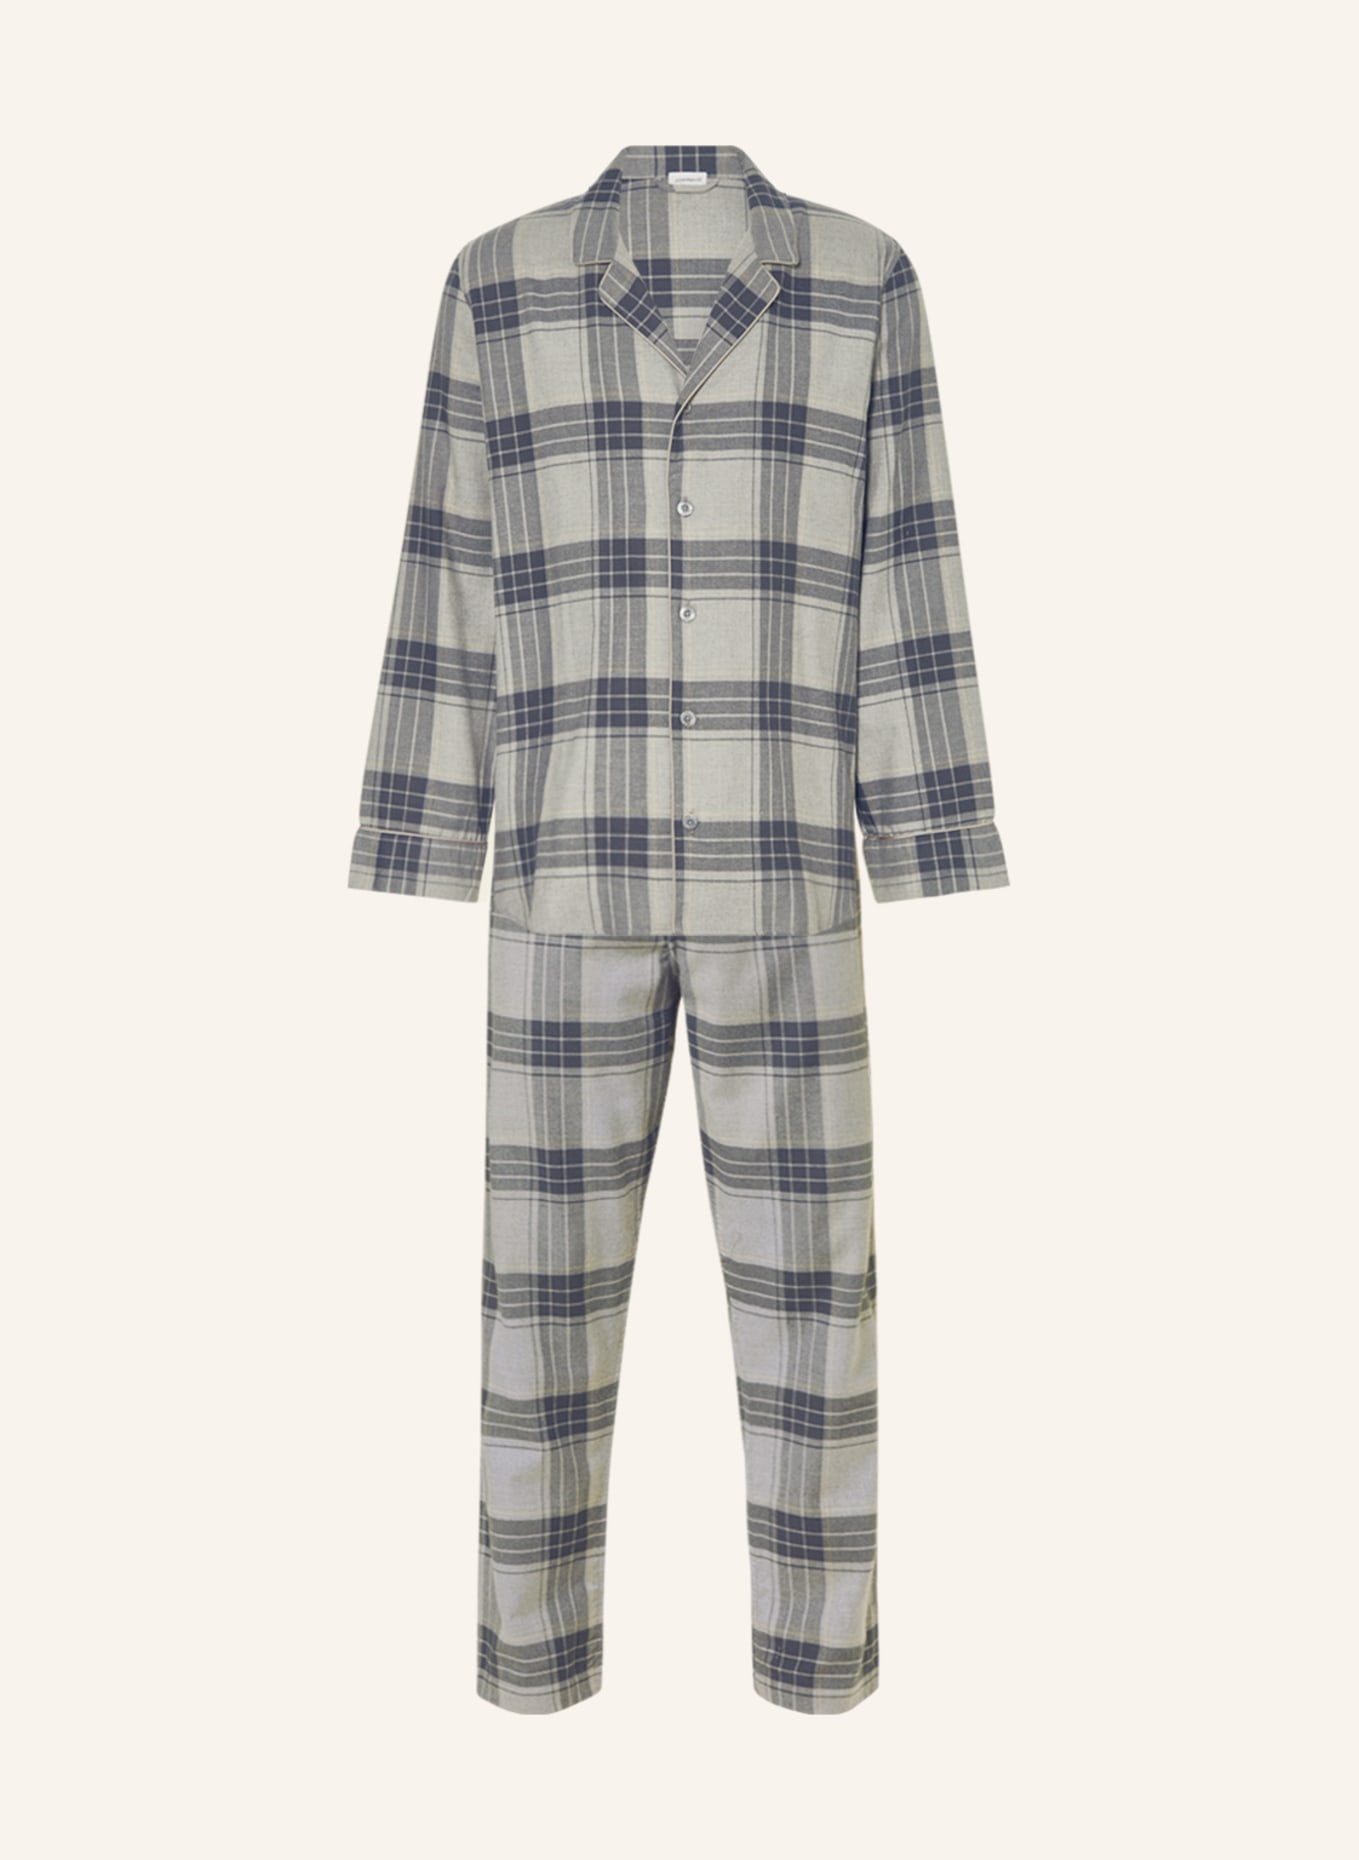 zimmerli Pajamas COZY FLANNEL in flannel, Color: DARK GRAY/ GRAY/ LIGHT GRAY (Image 1)